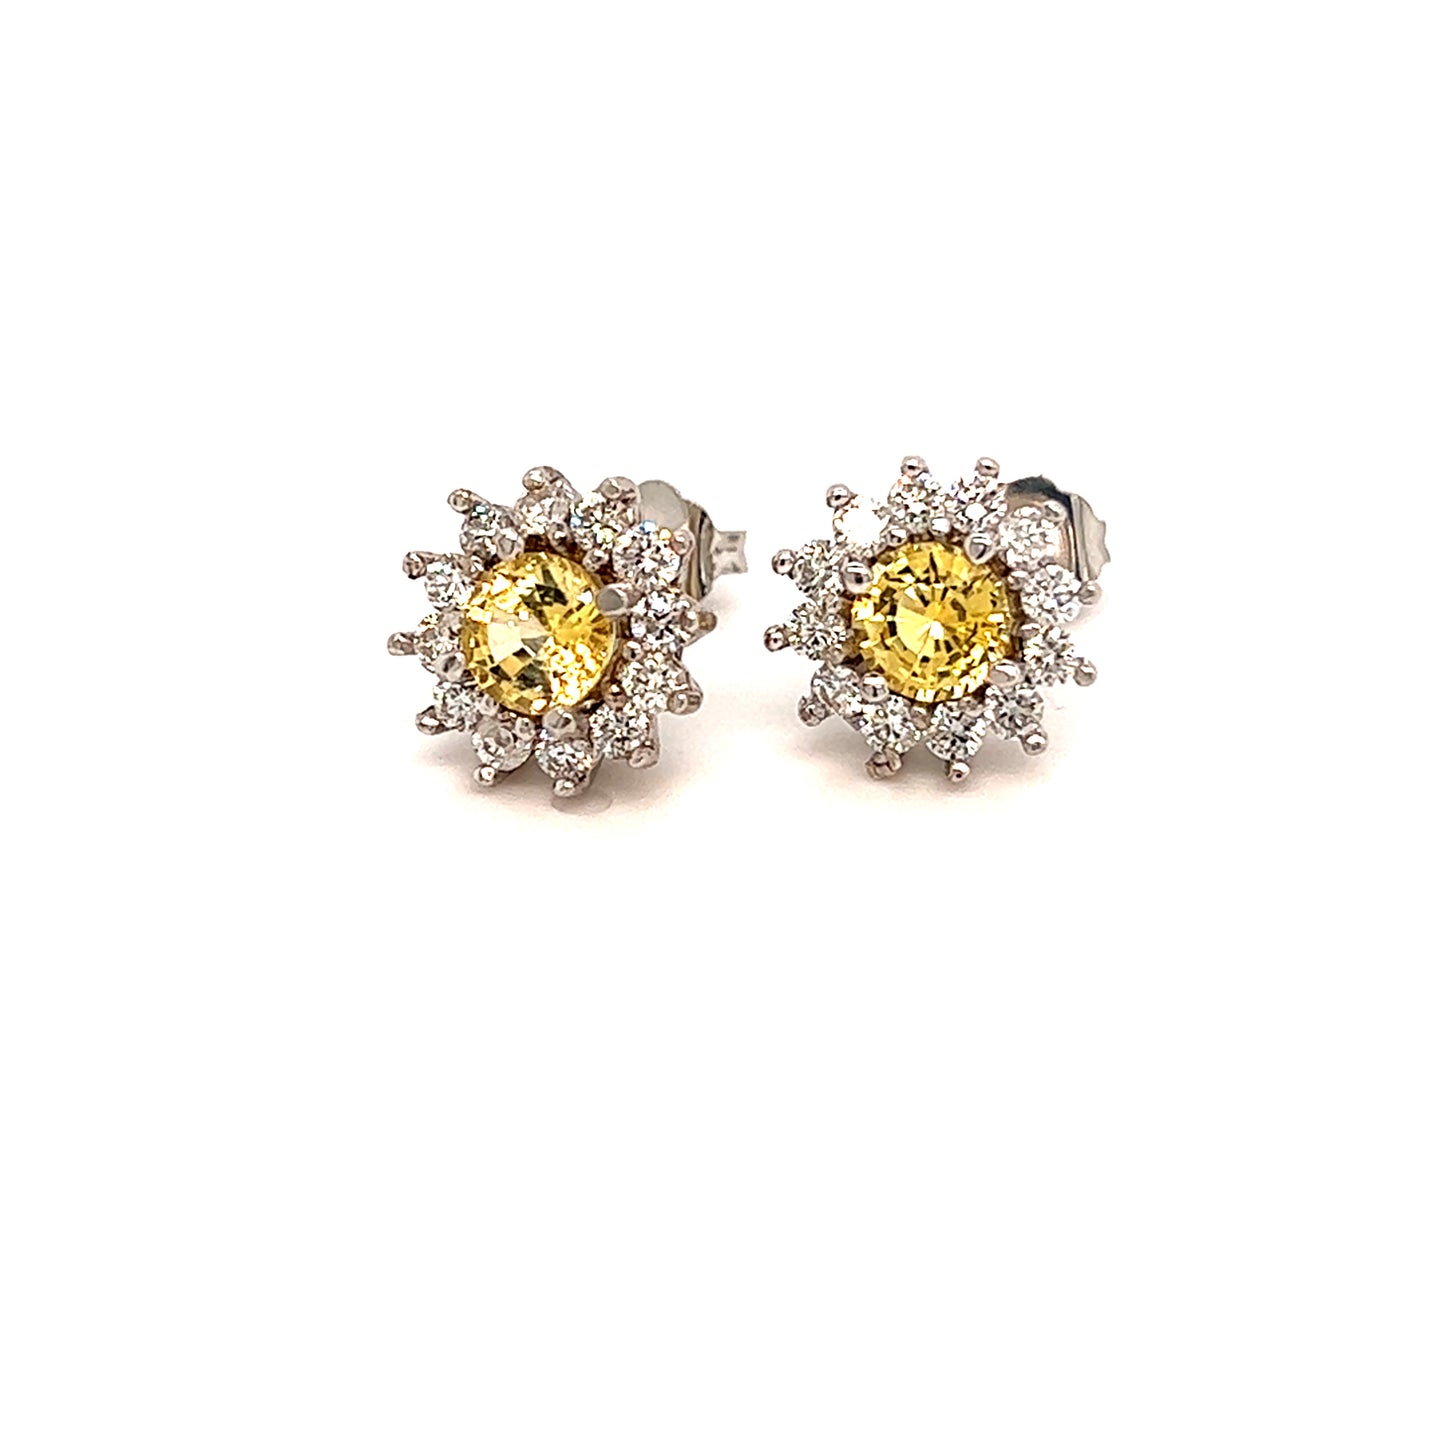 Natural Sapphire Diamond Stud Earrings 14k Gold 2.91 TCW Certified $4,950 121264 - Certified Estate Jewelry